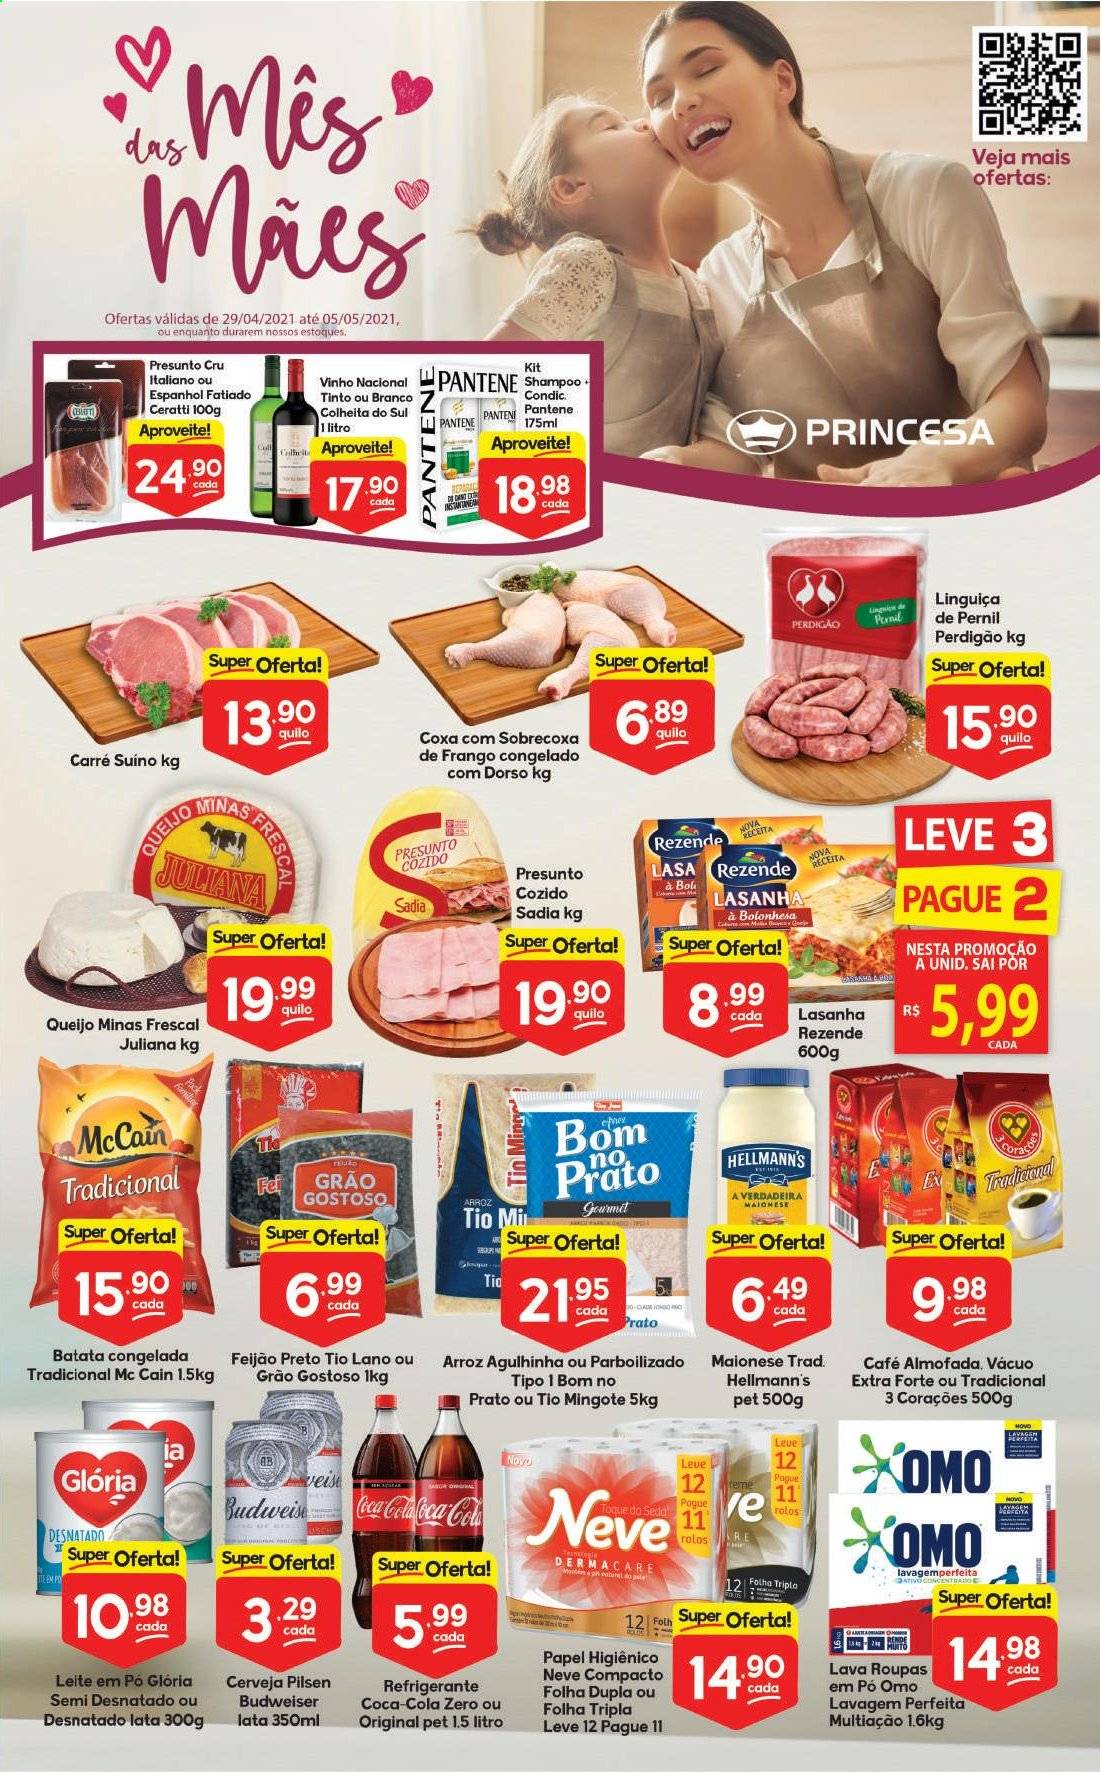 Encarte Princesa Supermercados  - 29.04.2021 - 05.05.2021.